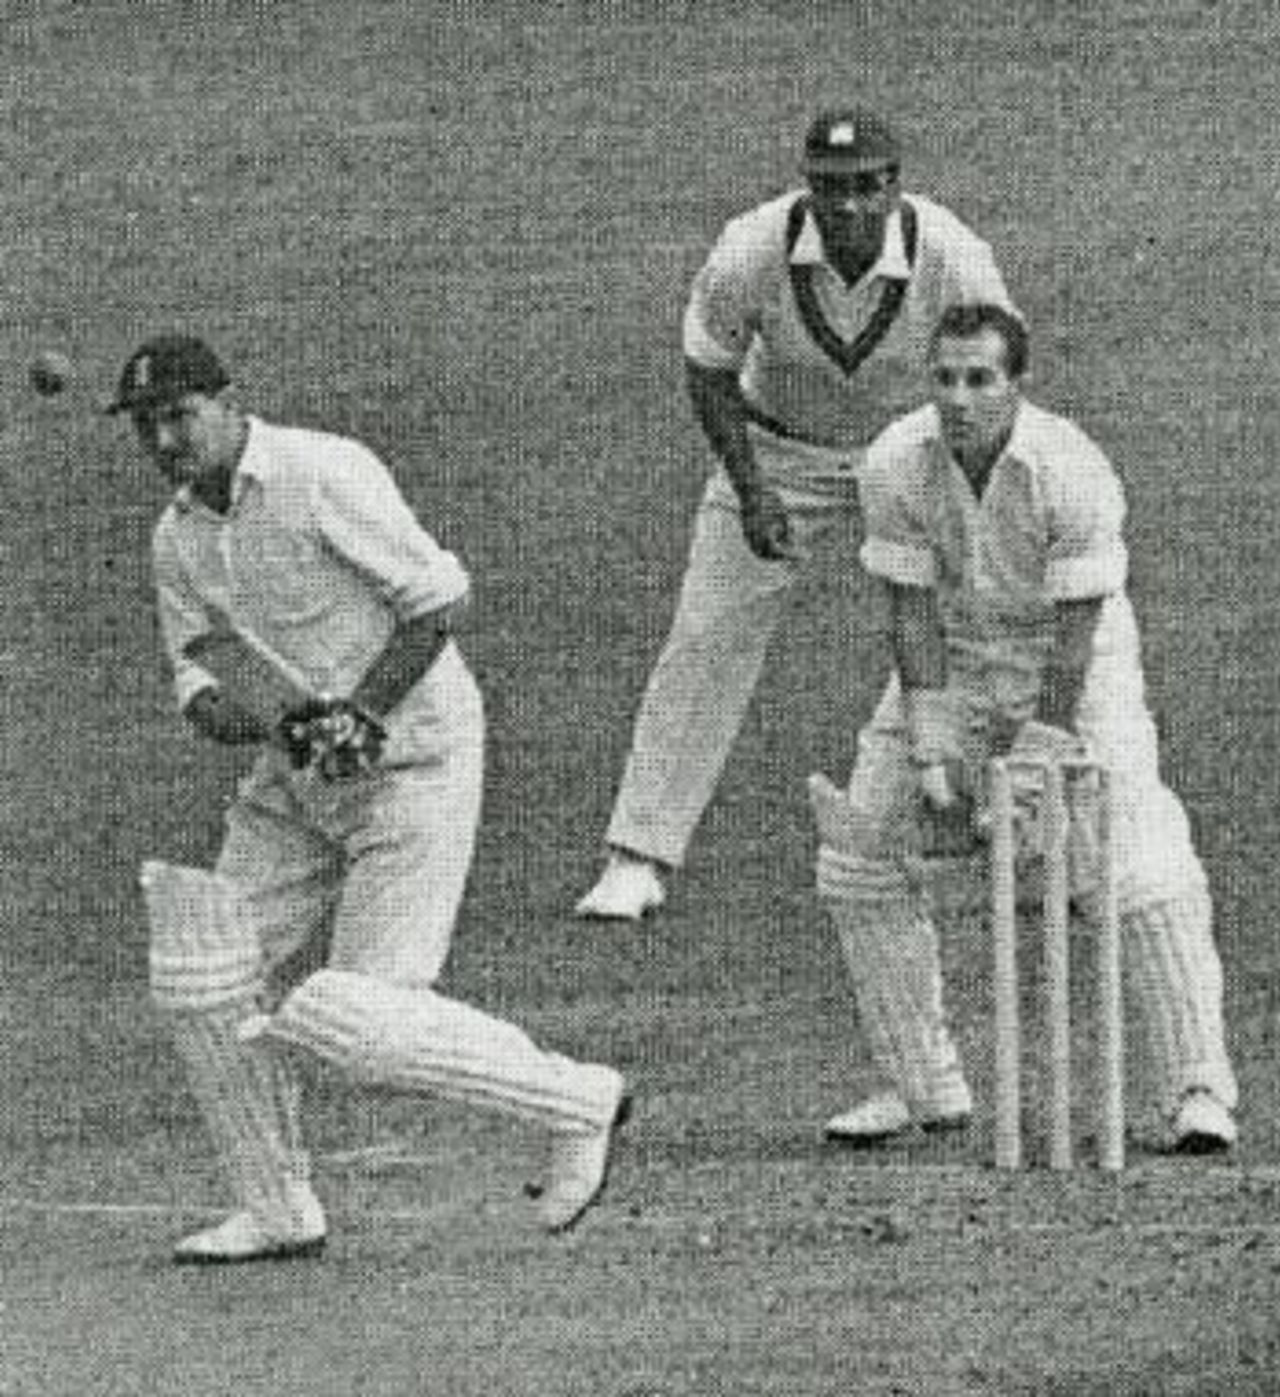 A pensive Tom Graveney batting, England v West Indies, Edgbaston, 1957